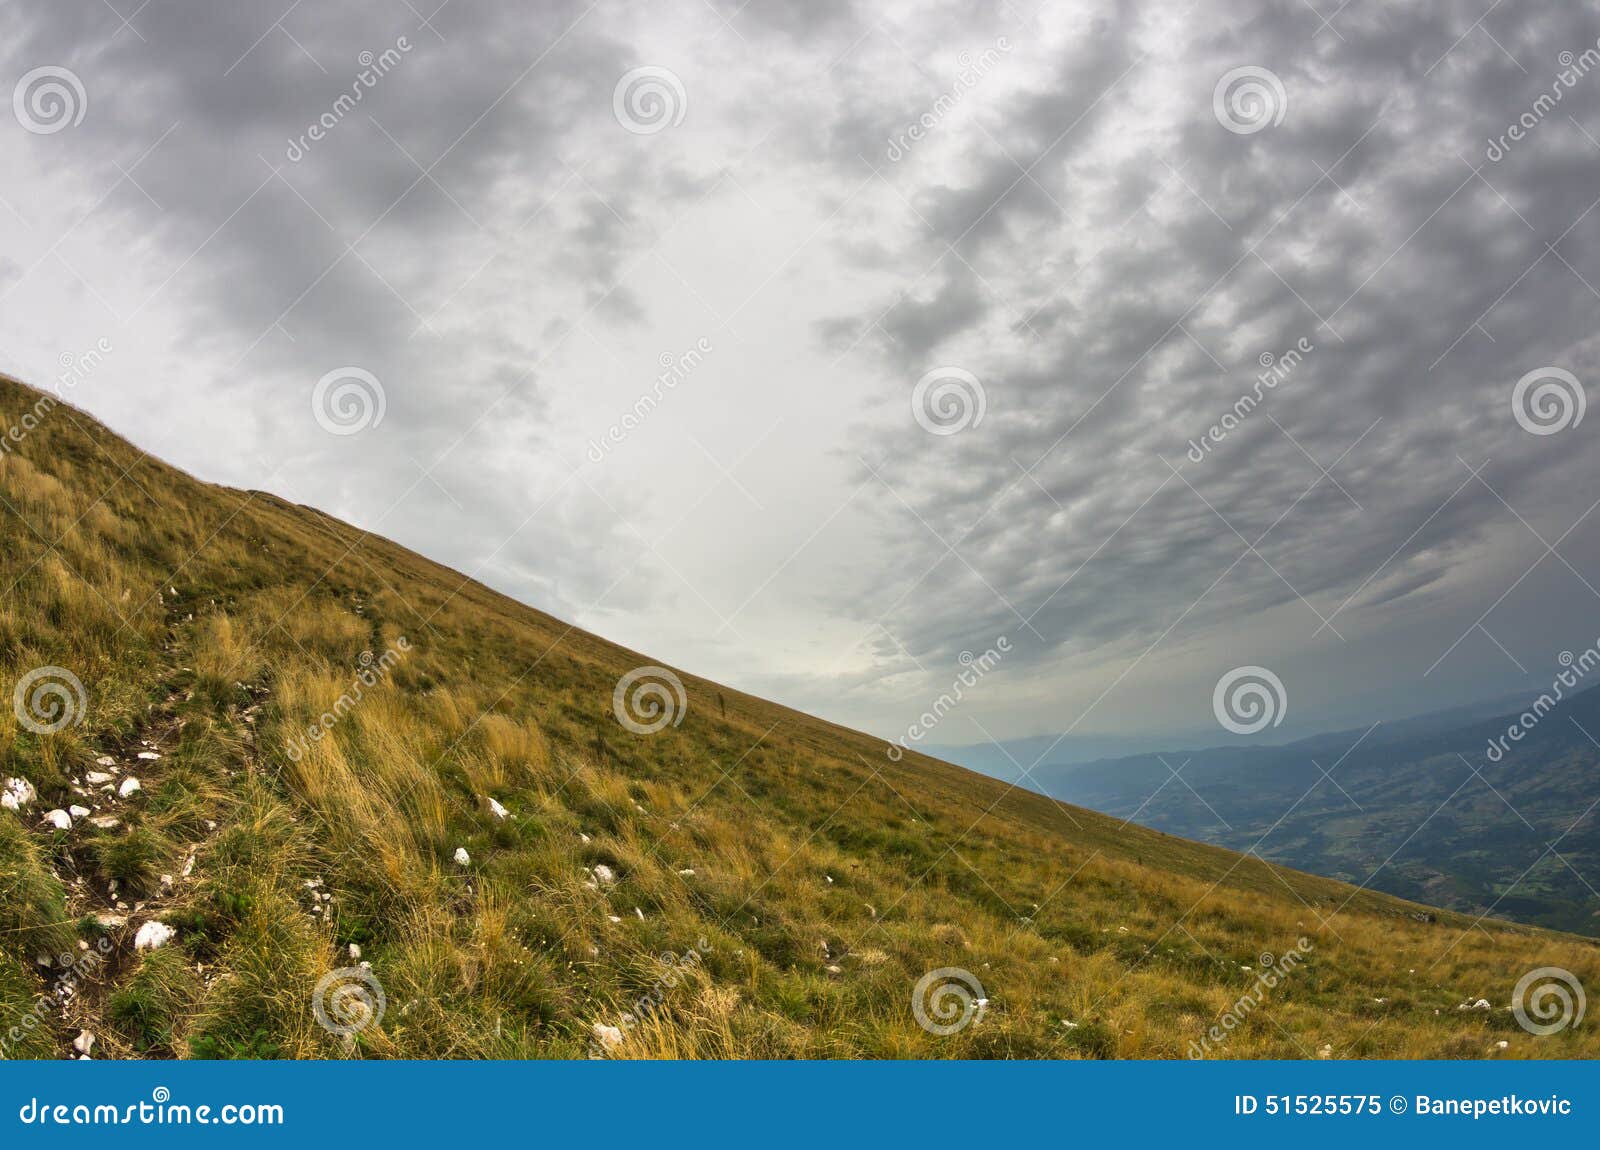 hillside with trekking path to trem peak at suva planina mountain